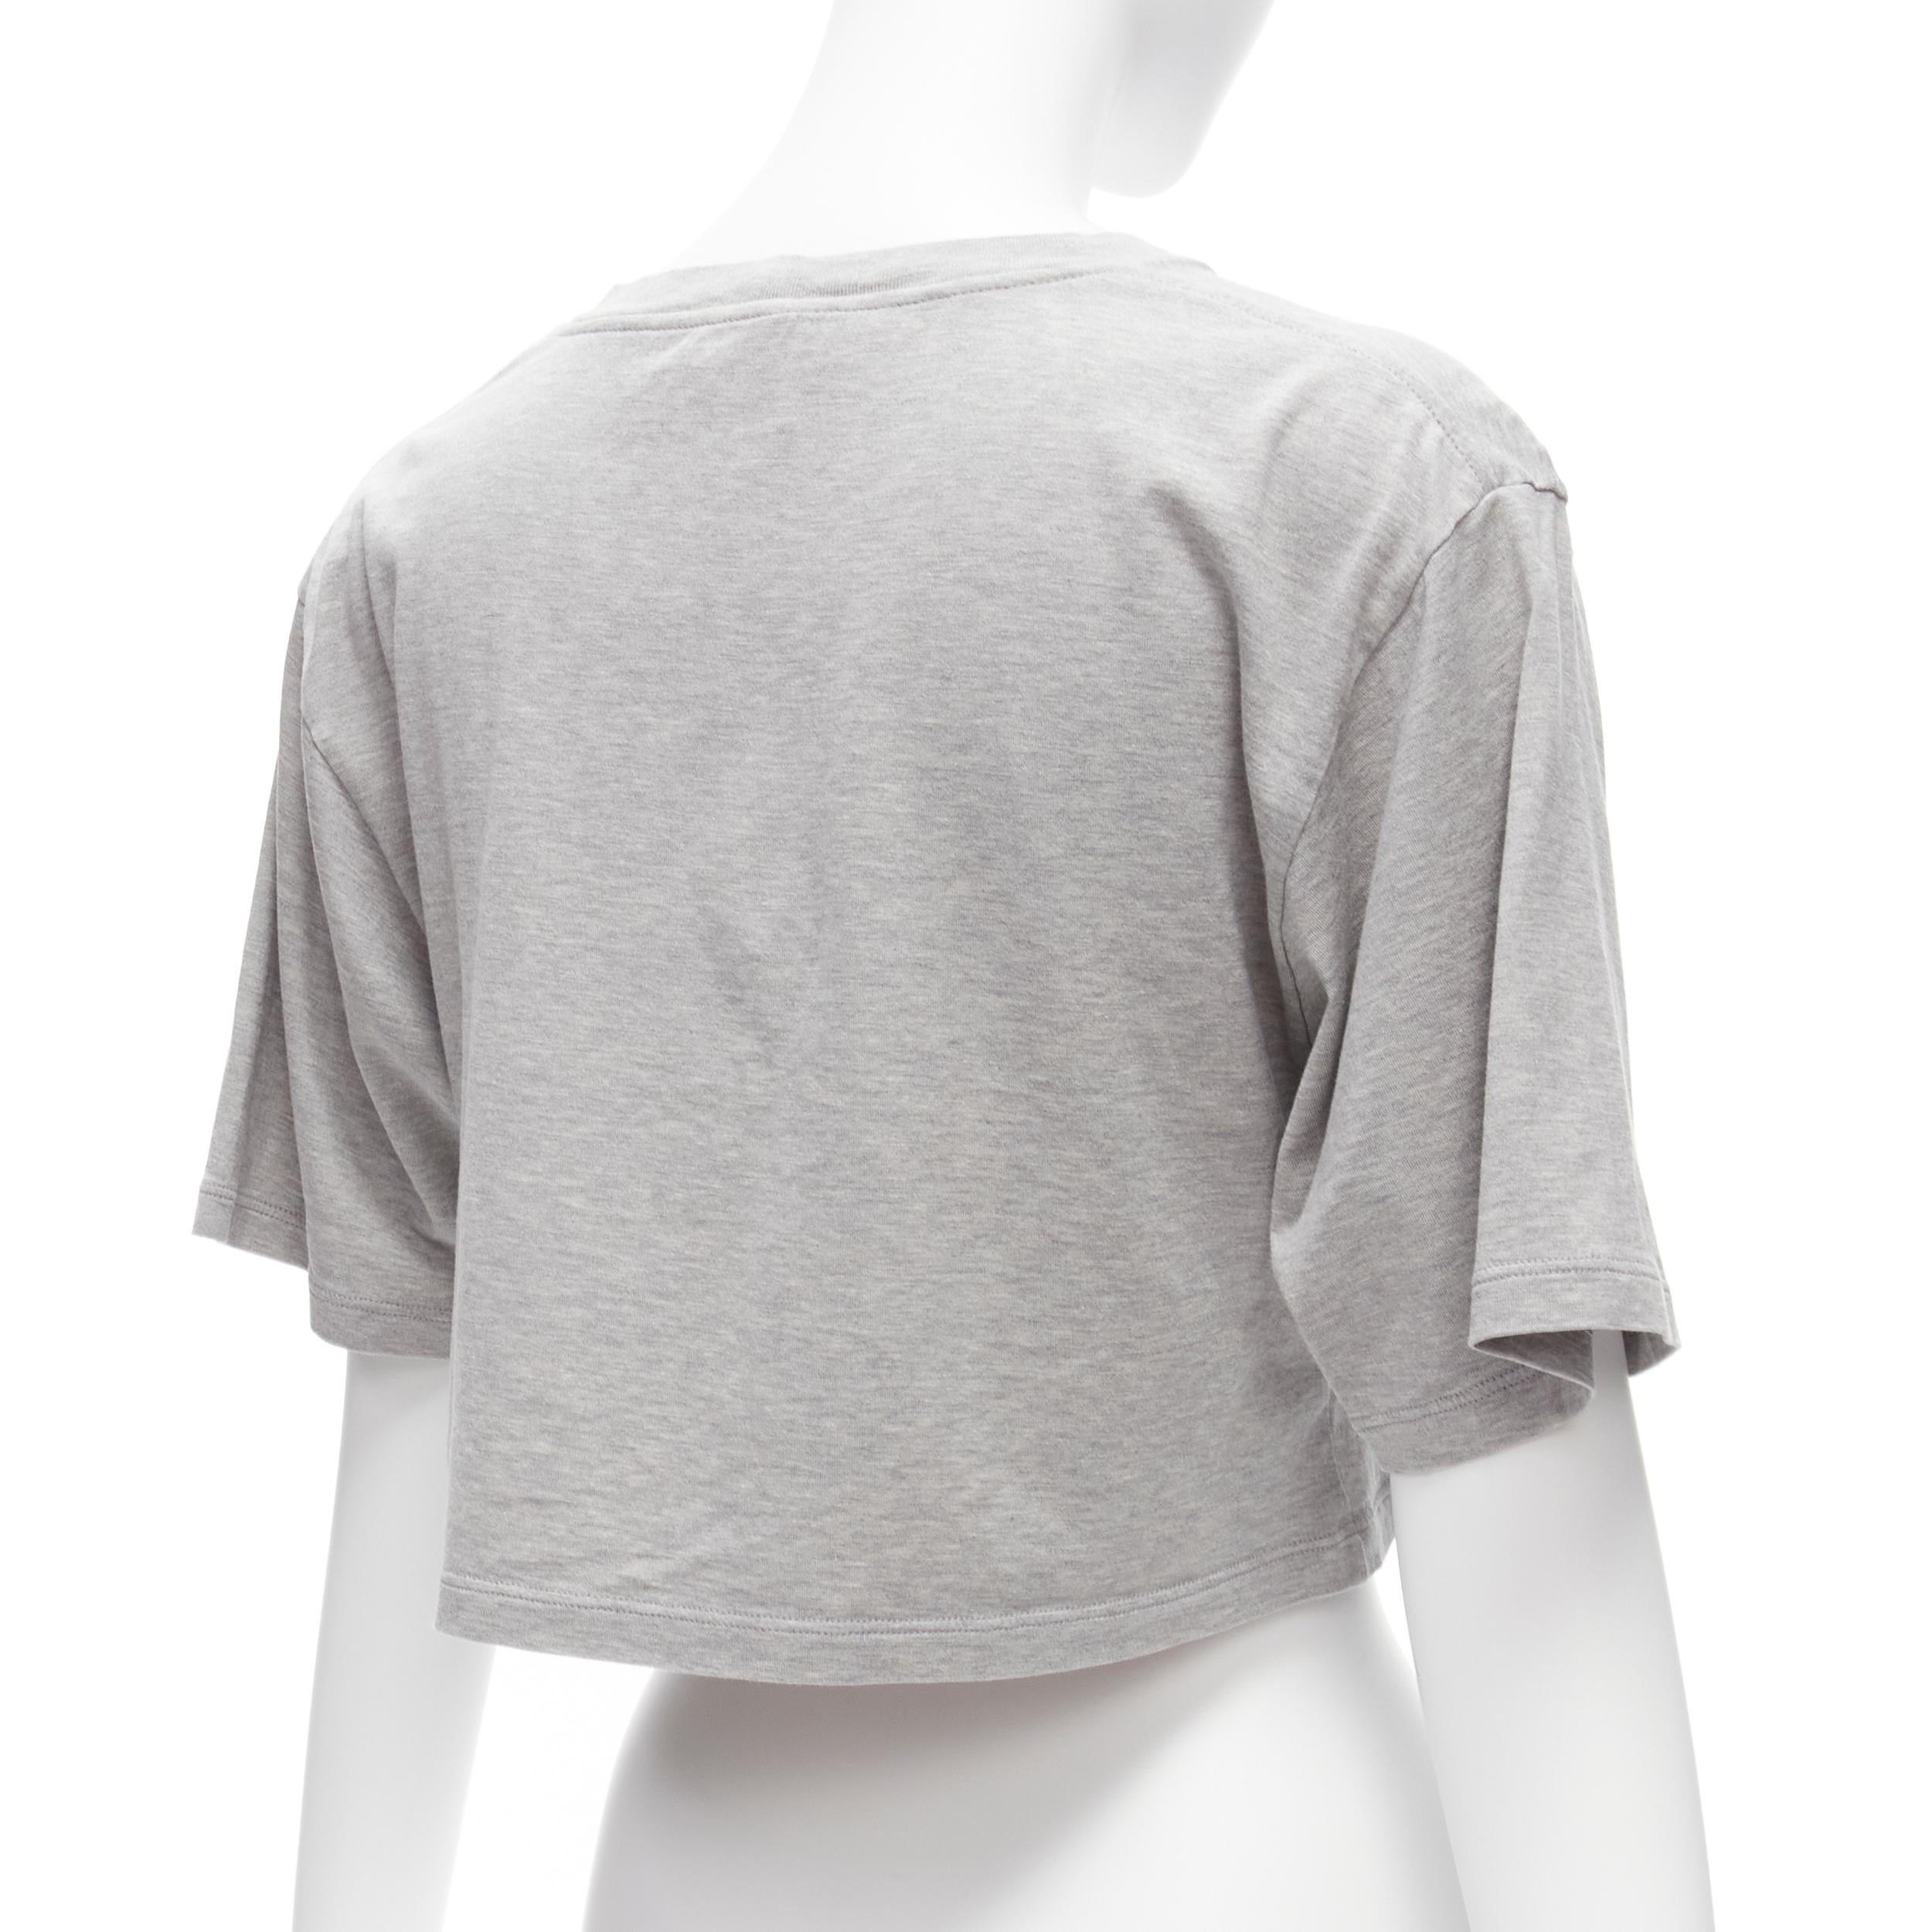 CELINE PARIS red logo grey cotton crew neck cropped tshirt XS For Sale 3